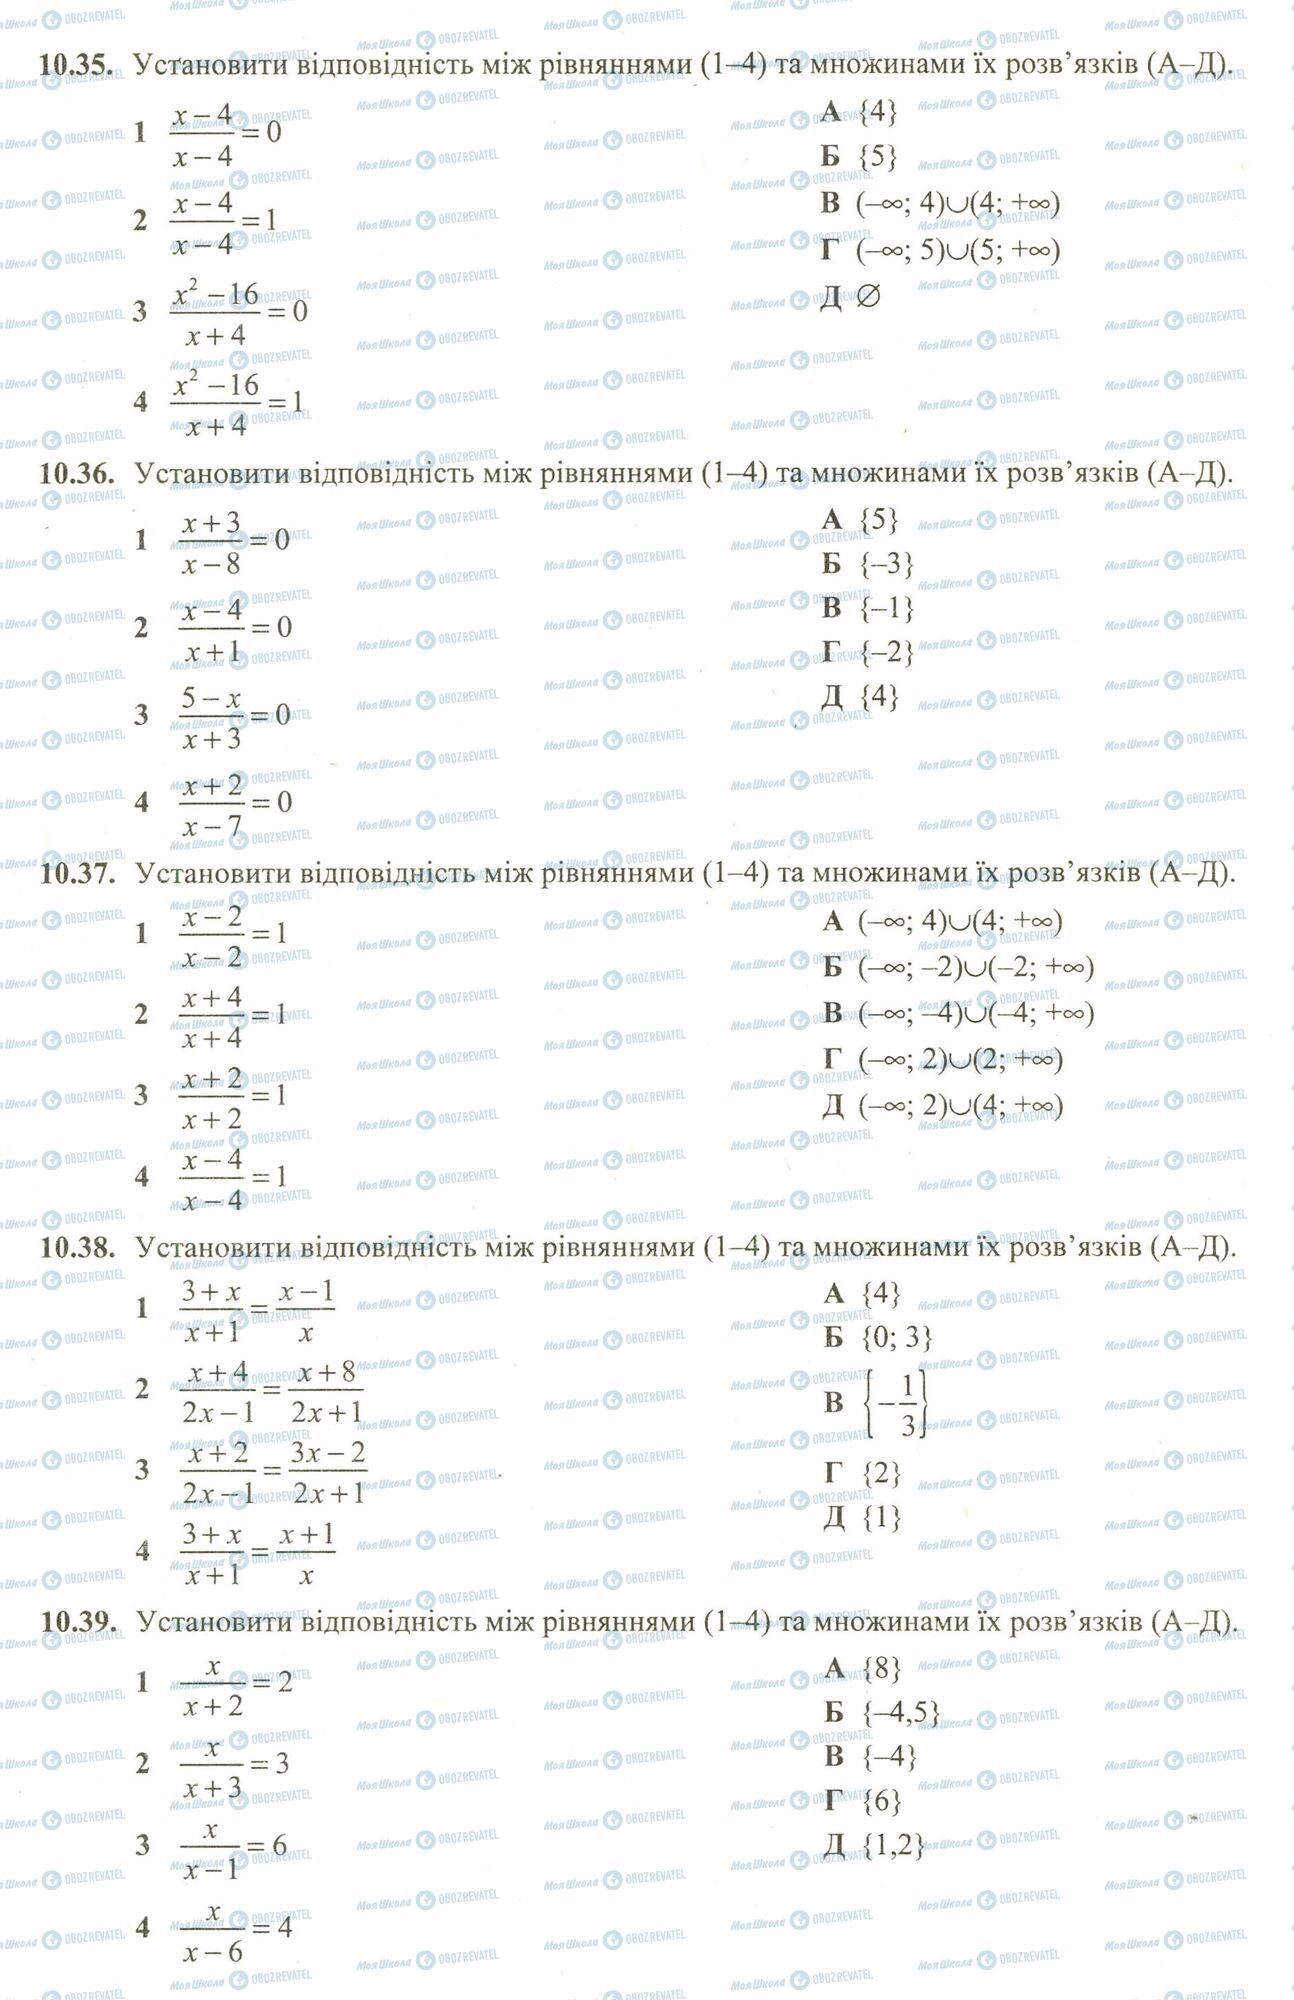 ЗНО Математика 11 класс страница 35-39